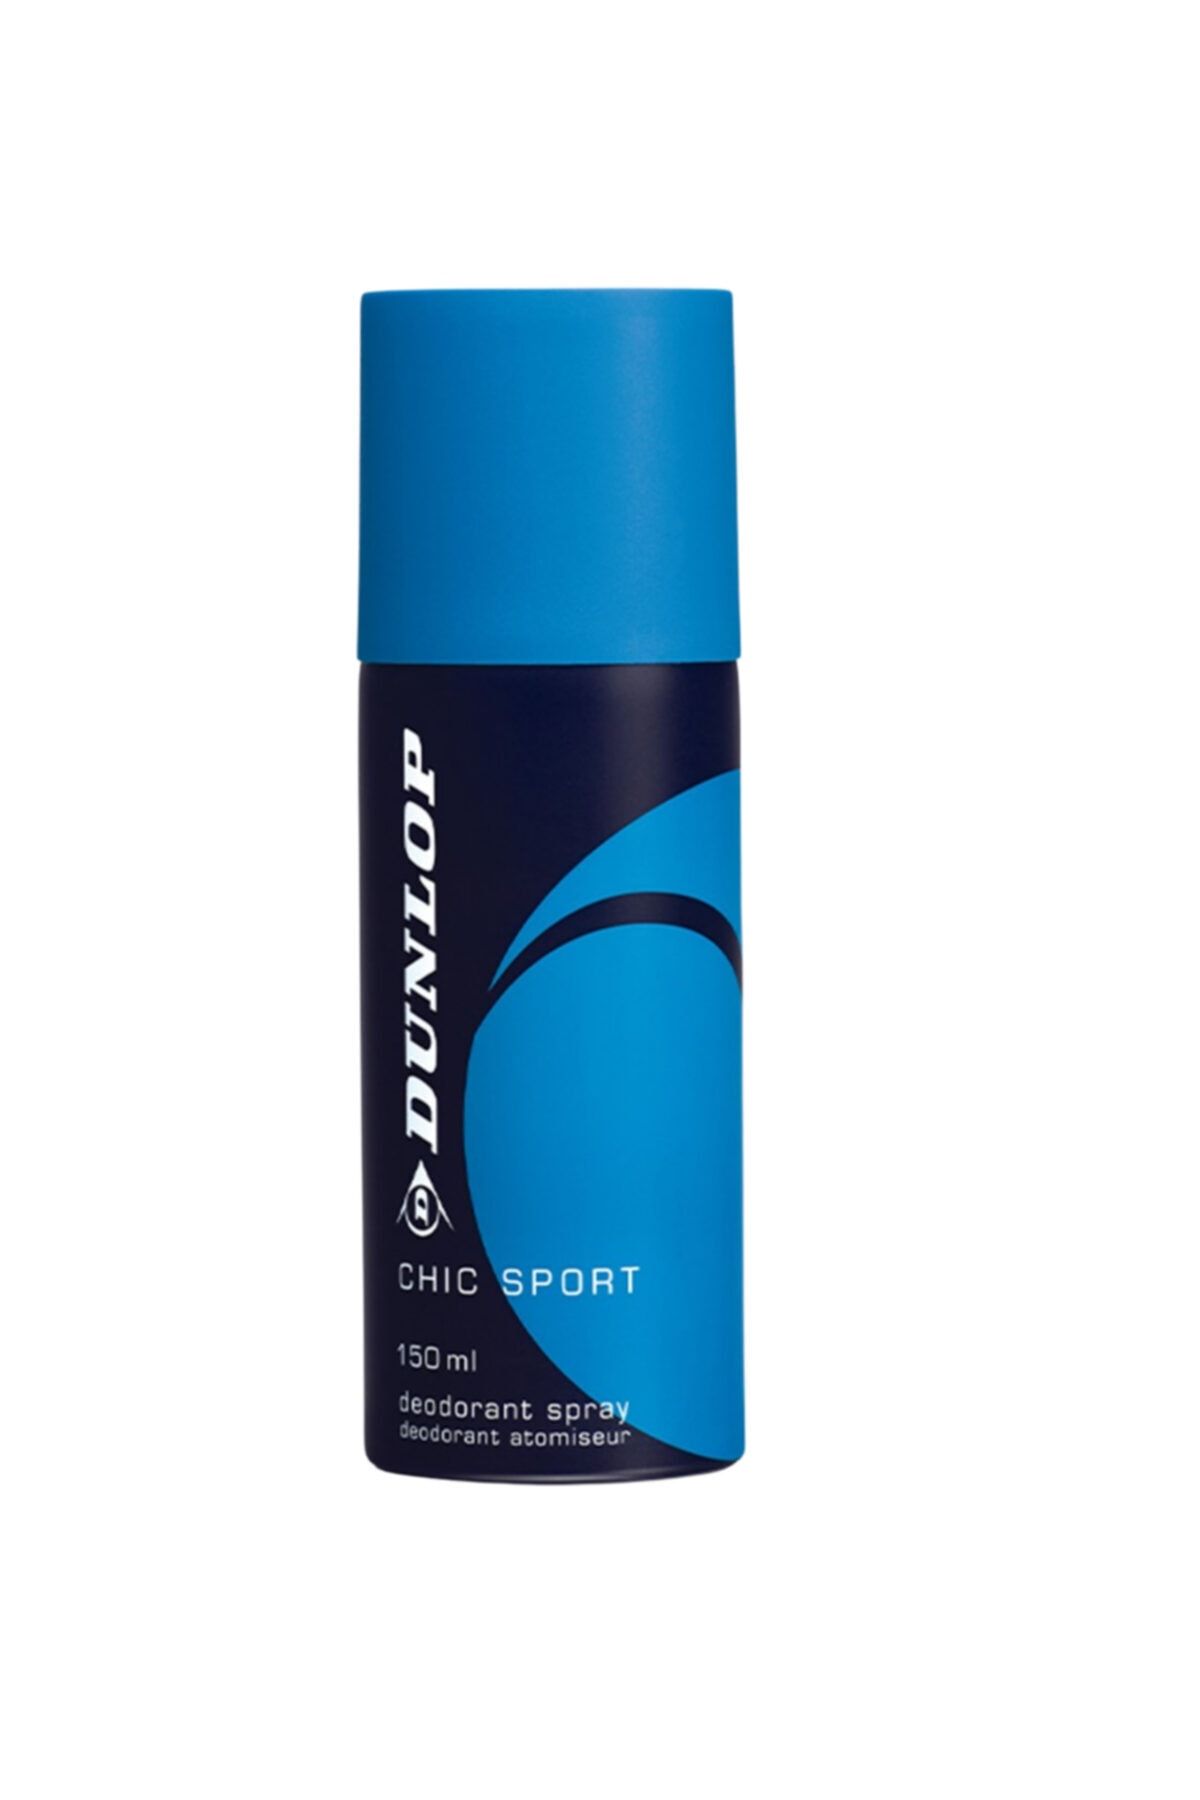 Dunlop Deodorant Chic Sport Spray 150ml - Erkek Deodorant (mavi)